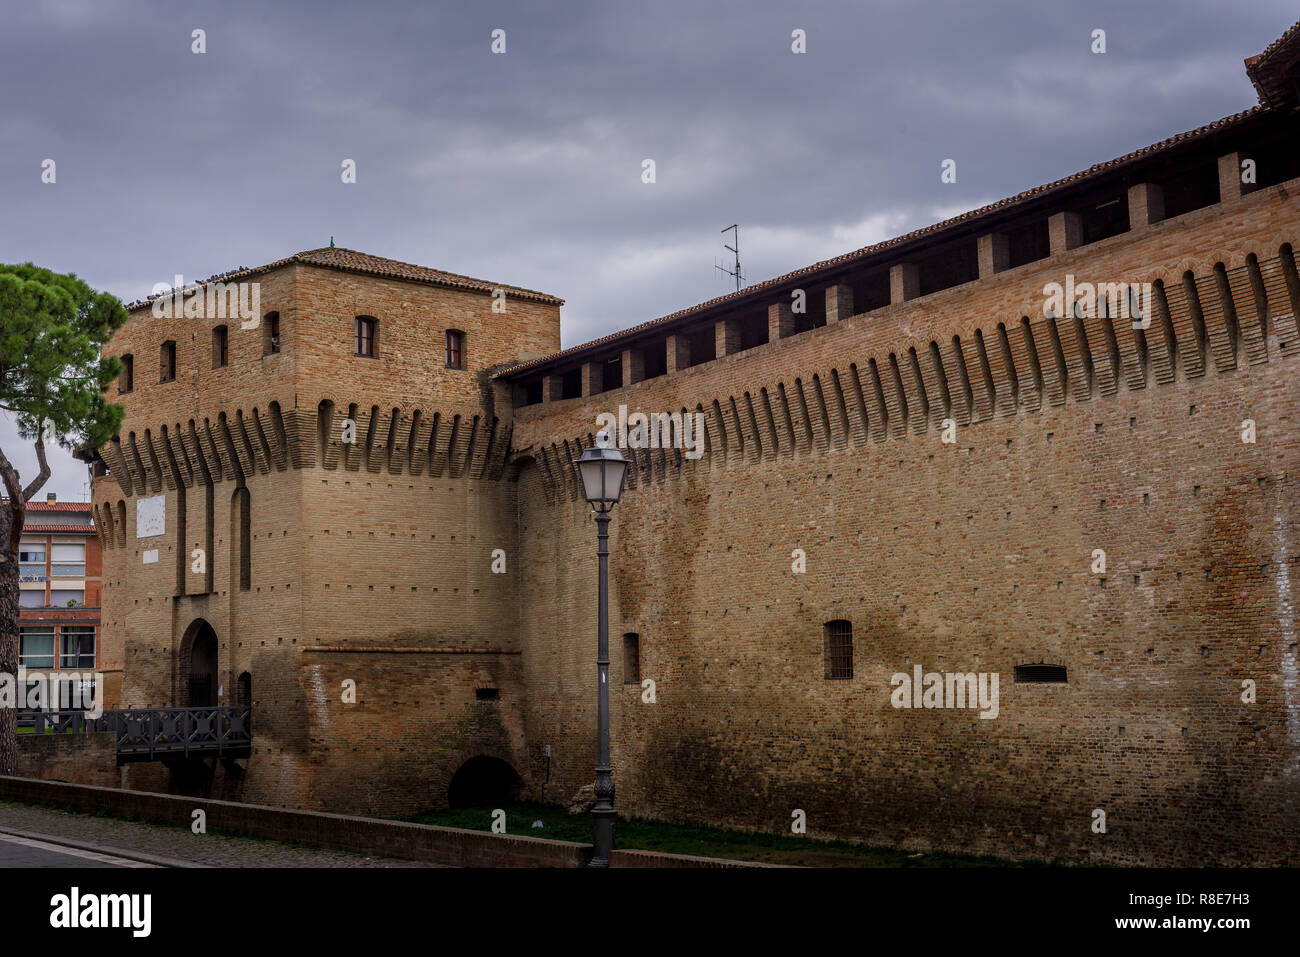 View of Italian town with Gothic medival castle fortezza in Forlimpopoli , Cesena Forli province, Emilia Romagna, Italy Stock Photo